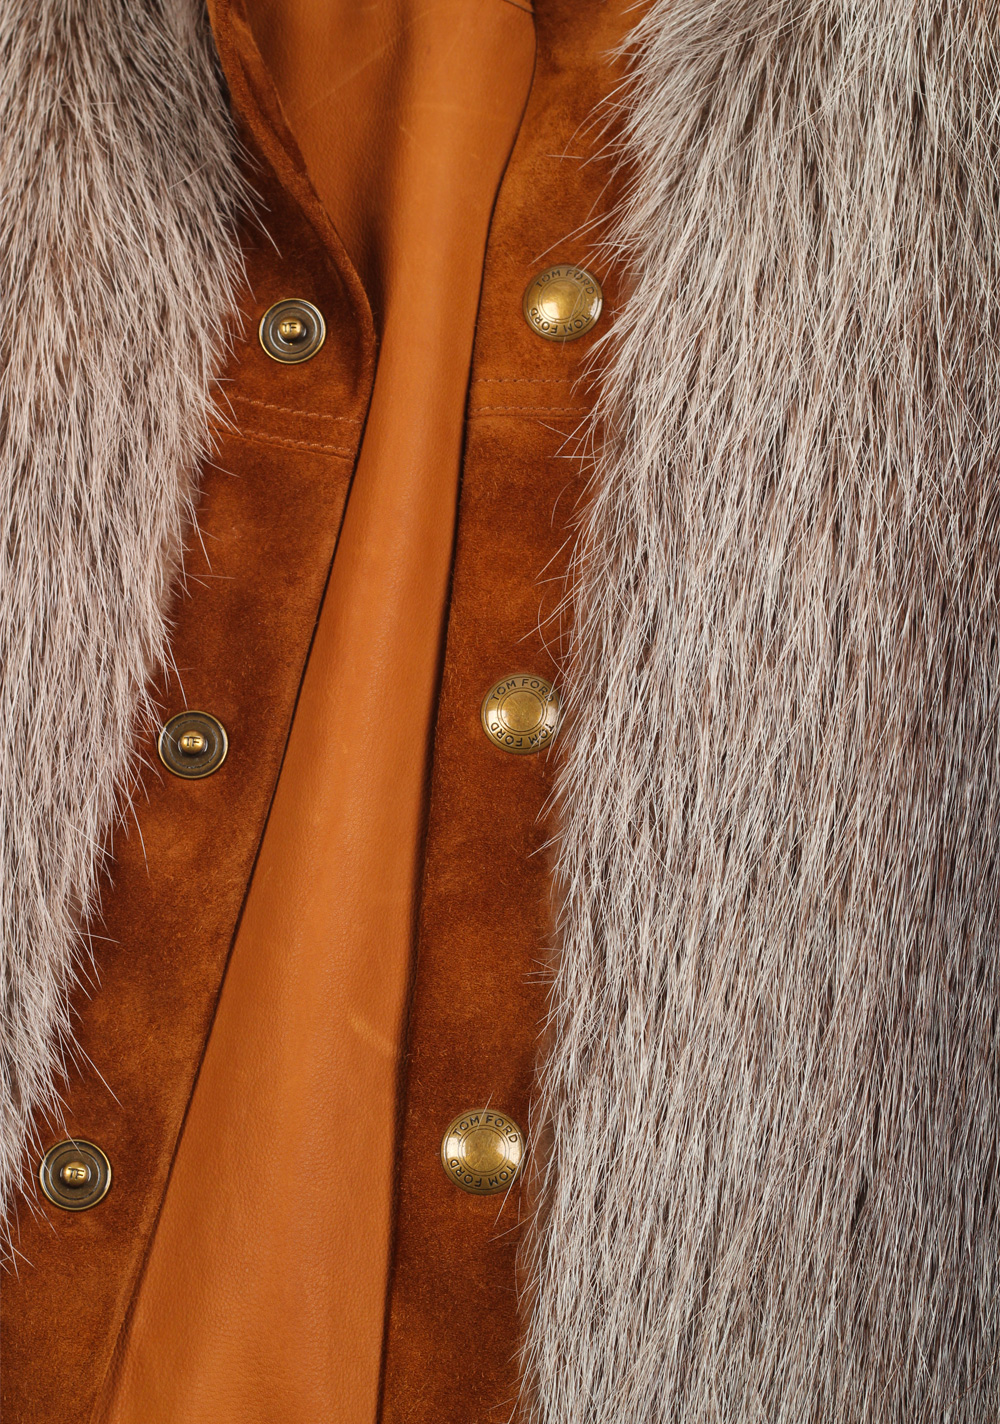 TOM FORD Brown Cashmere Suede Pony Fur Jacket Size 48 / 38R U.S. Outerwear | Costume Limité